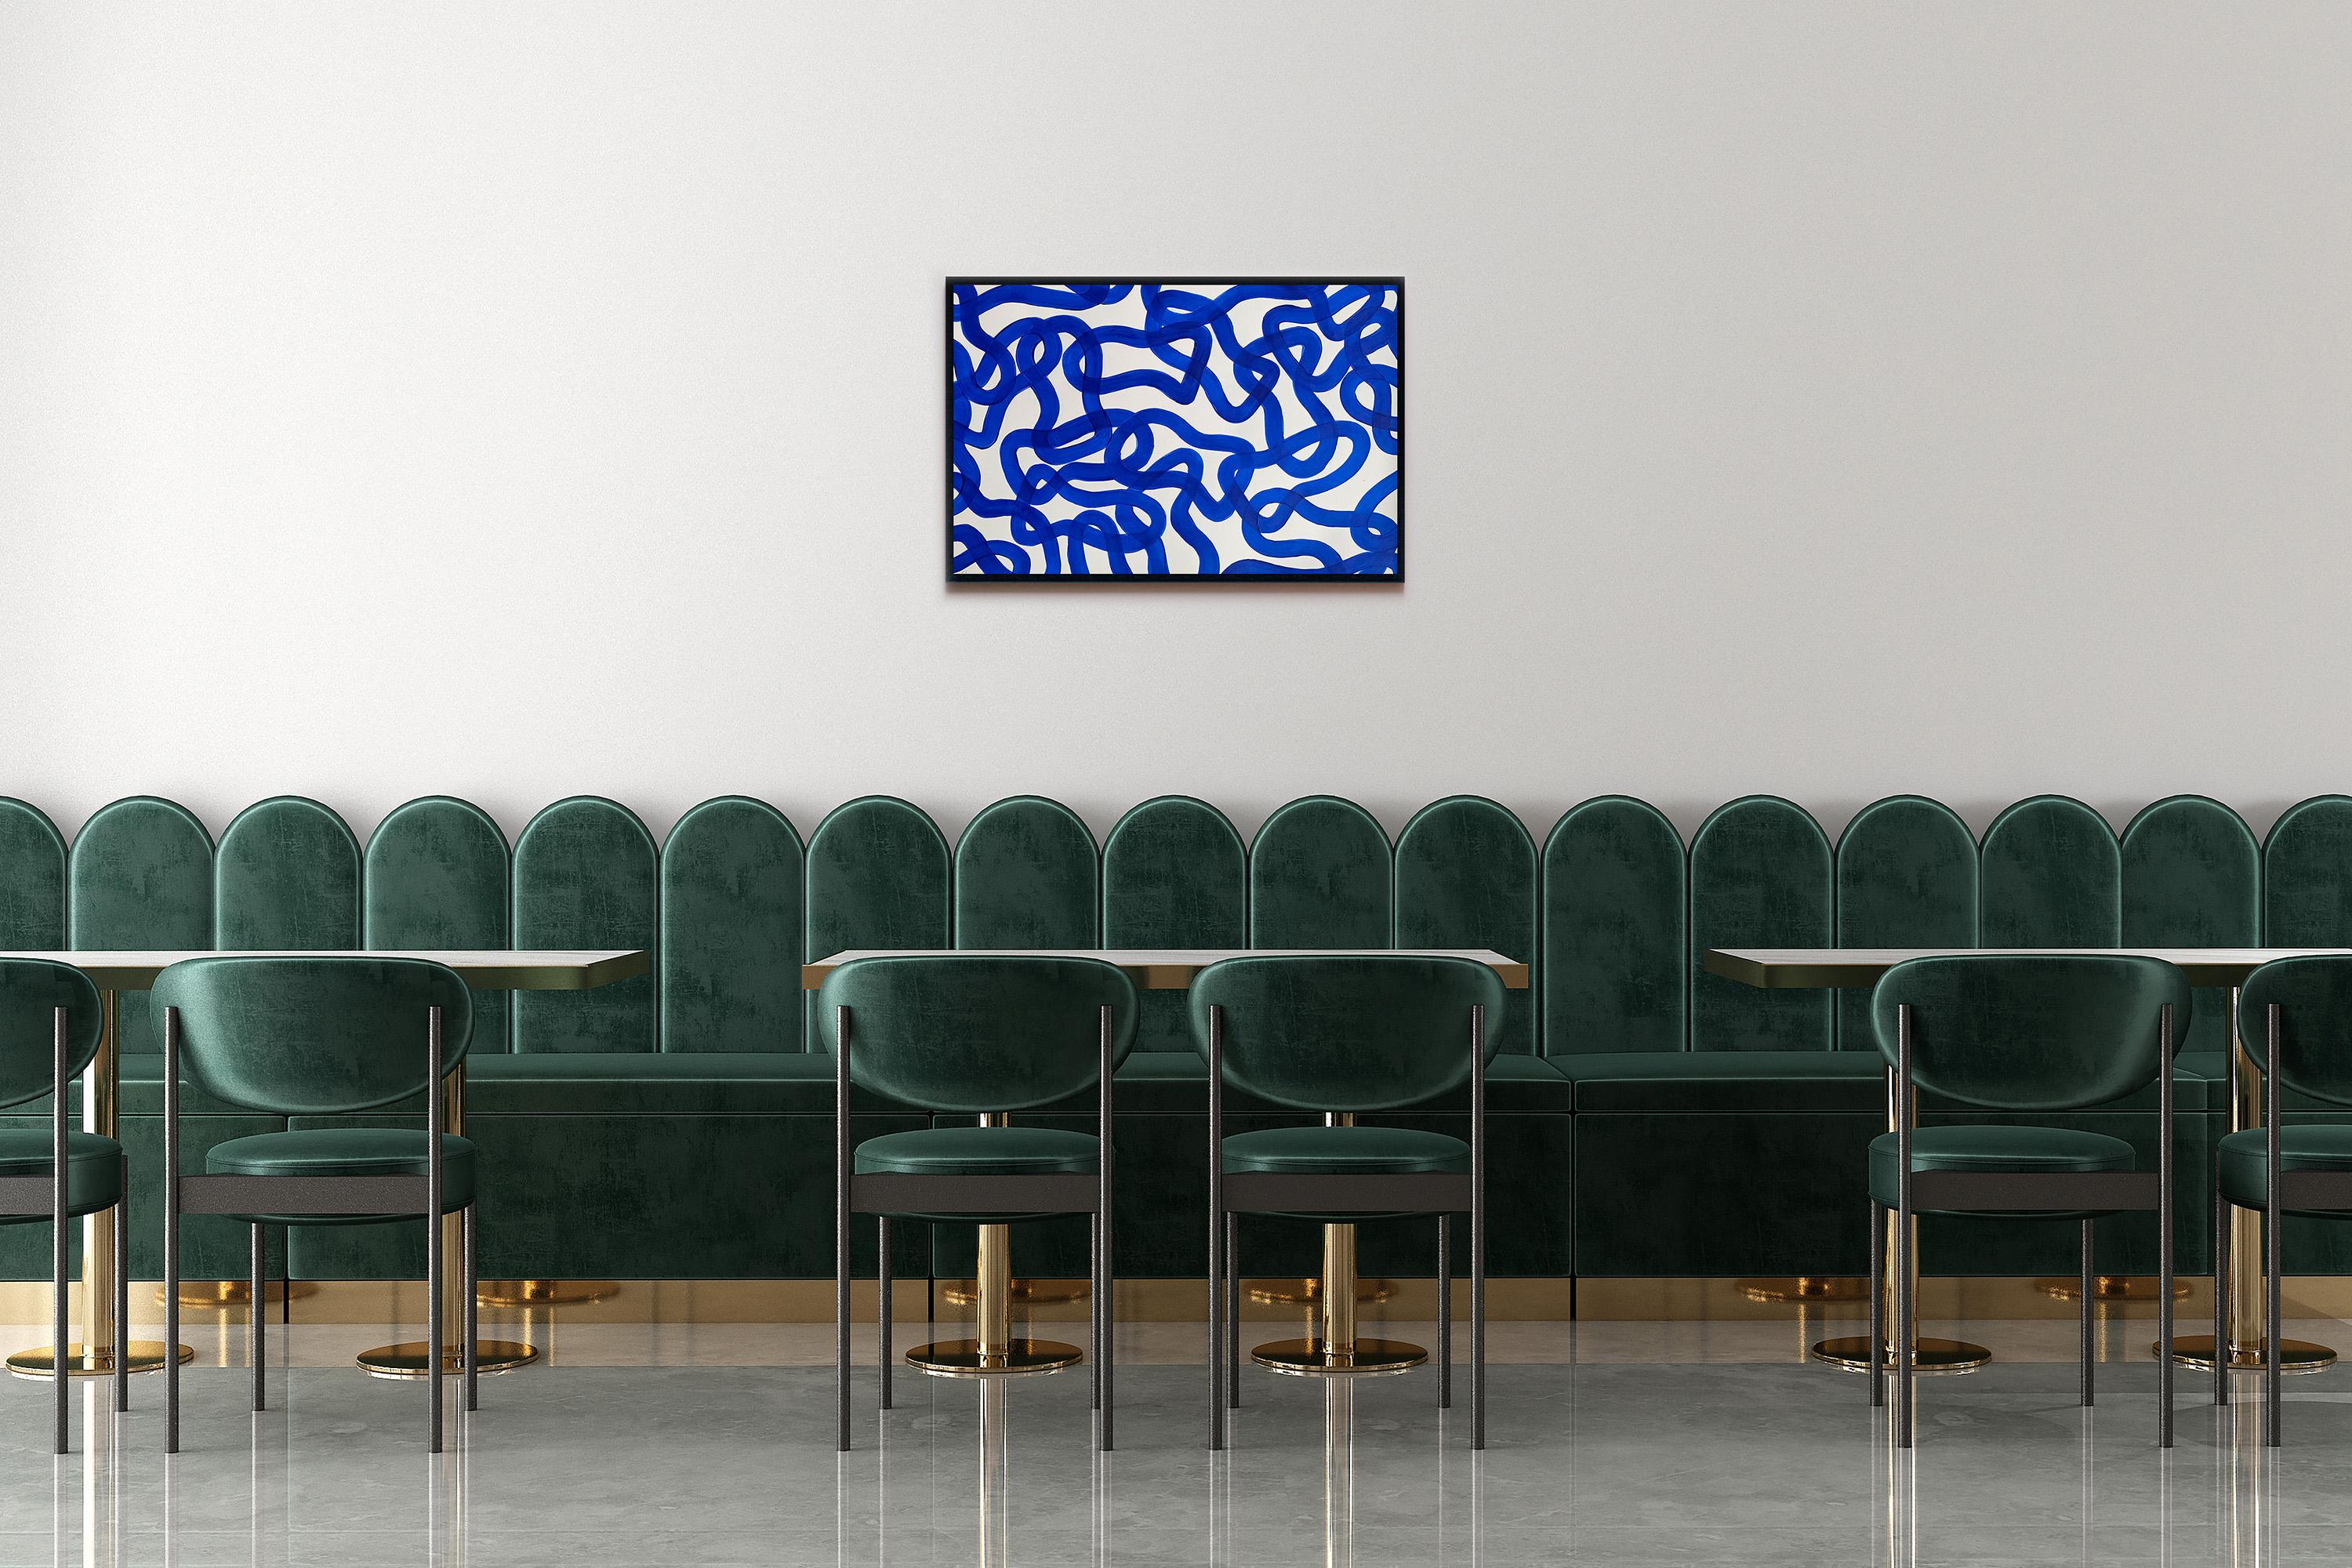 Marina, Coastal Painting of Abstract Fish Patterns, White and Blue Brushstrokes 3